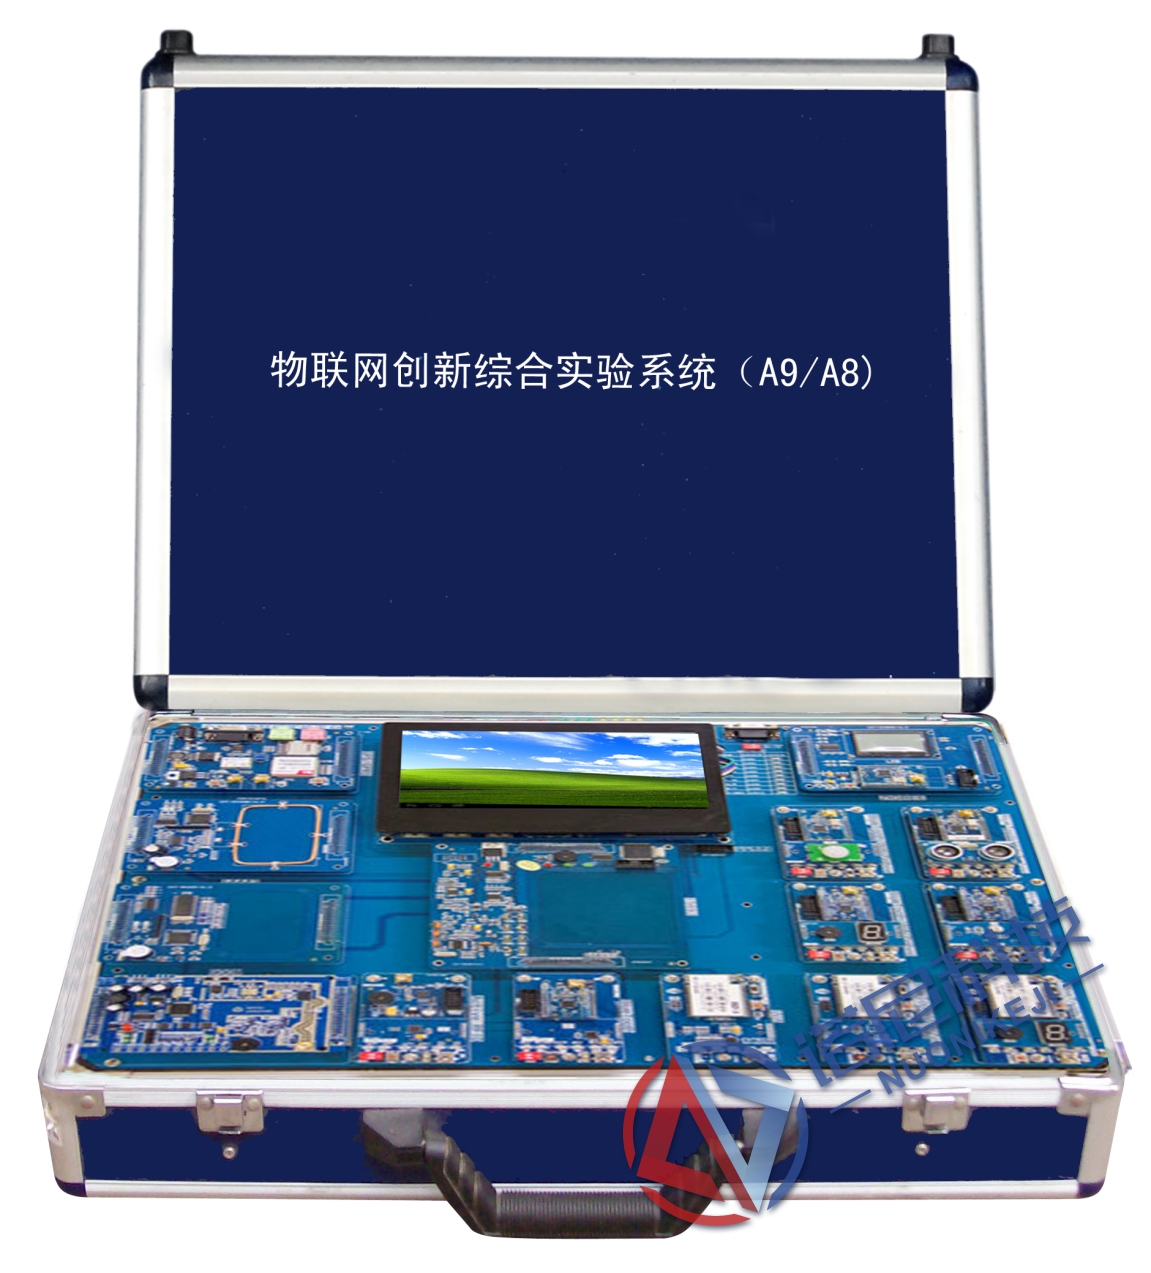 GL0506C 物聯網創新綜合實驗系統（A9/A8)